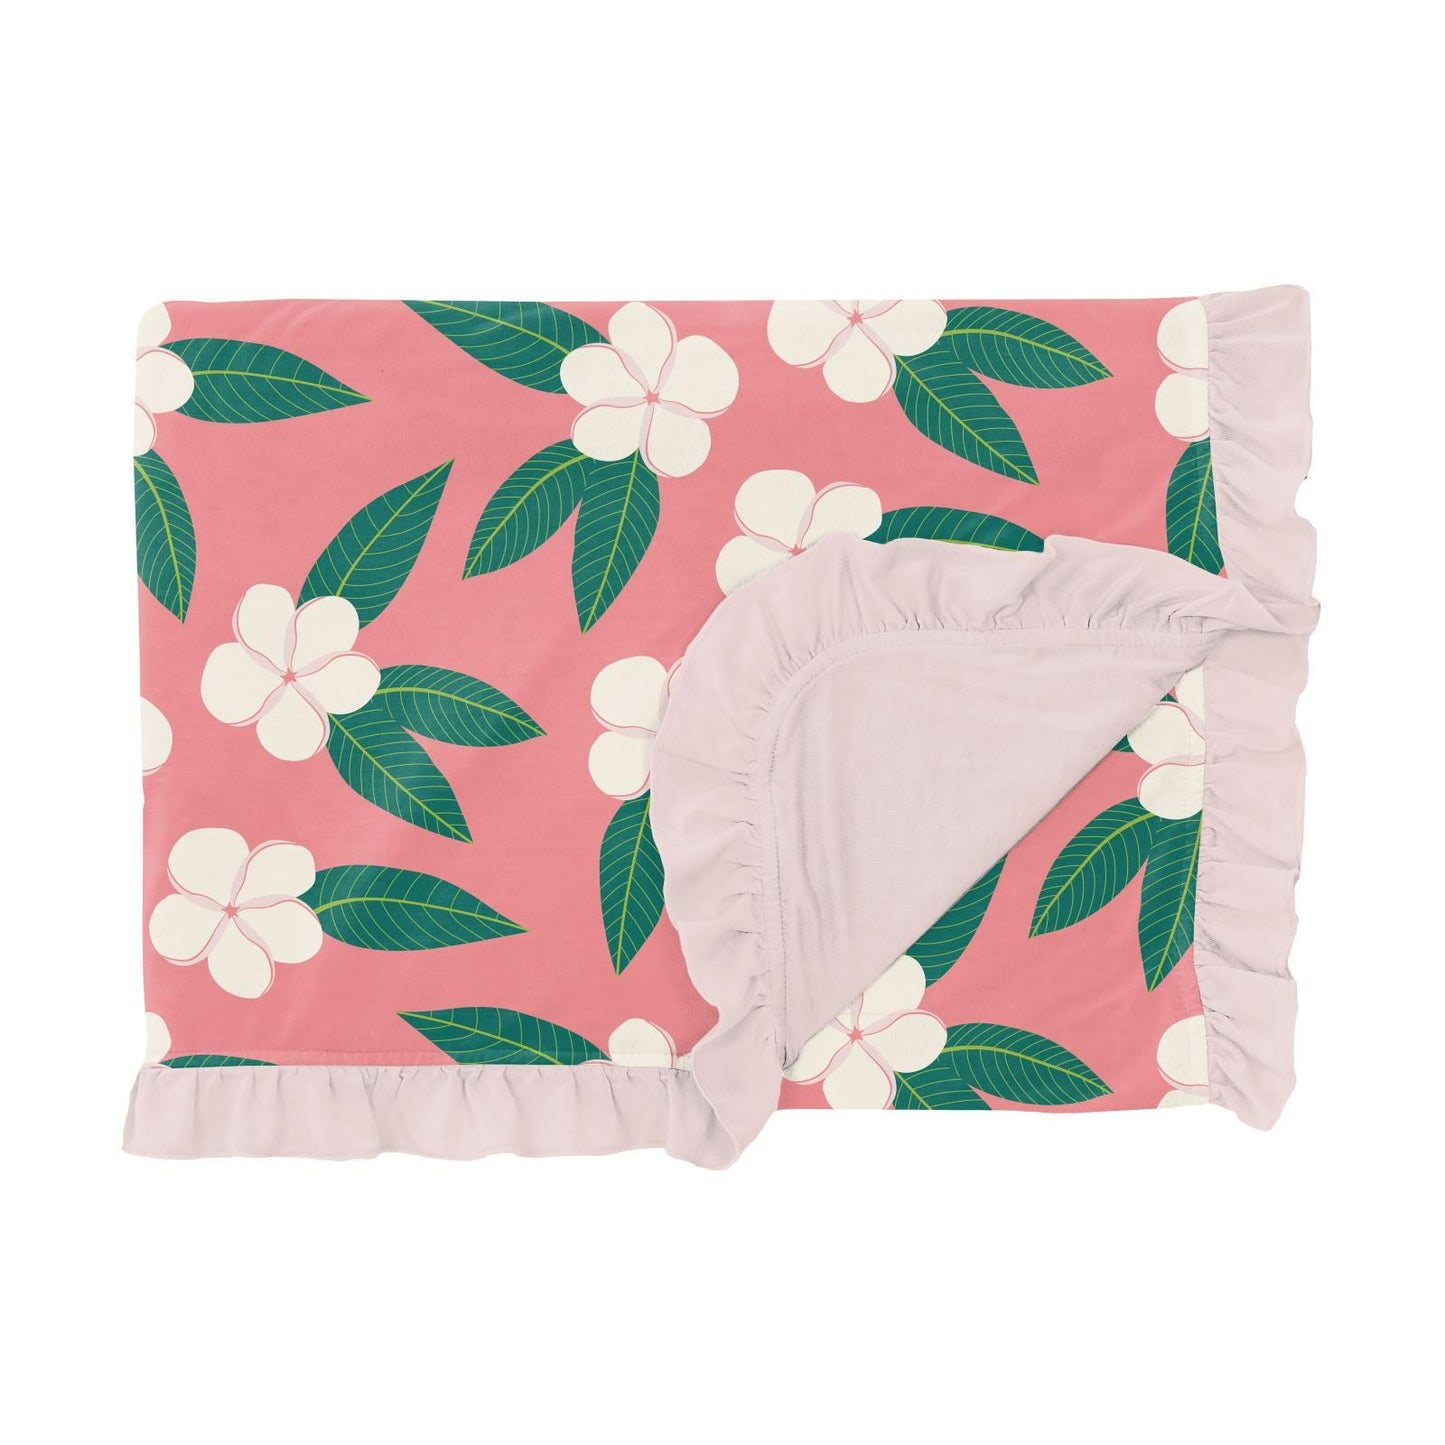 Throw Blanket with Ruffles (Double Layer) - Strawberry Plumeria